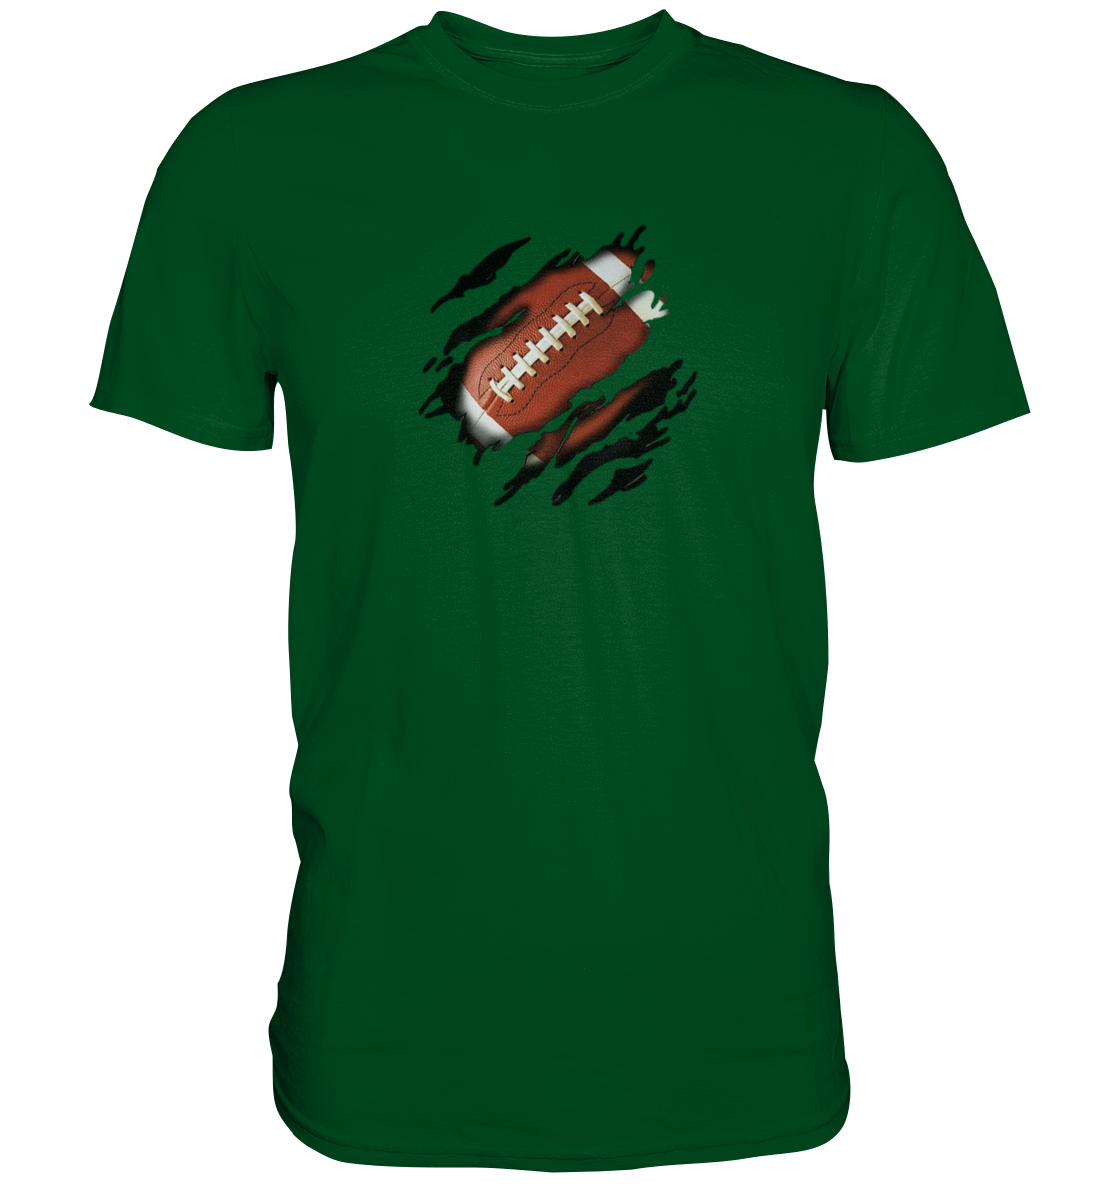 Football auf der Brust - Premium Shirt - Football Unity Football Unity